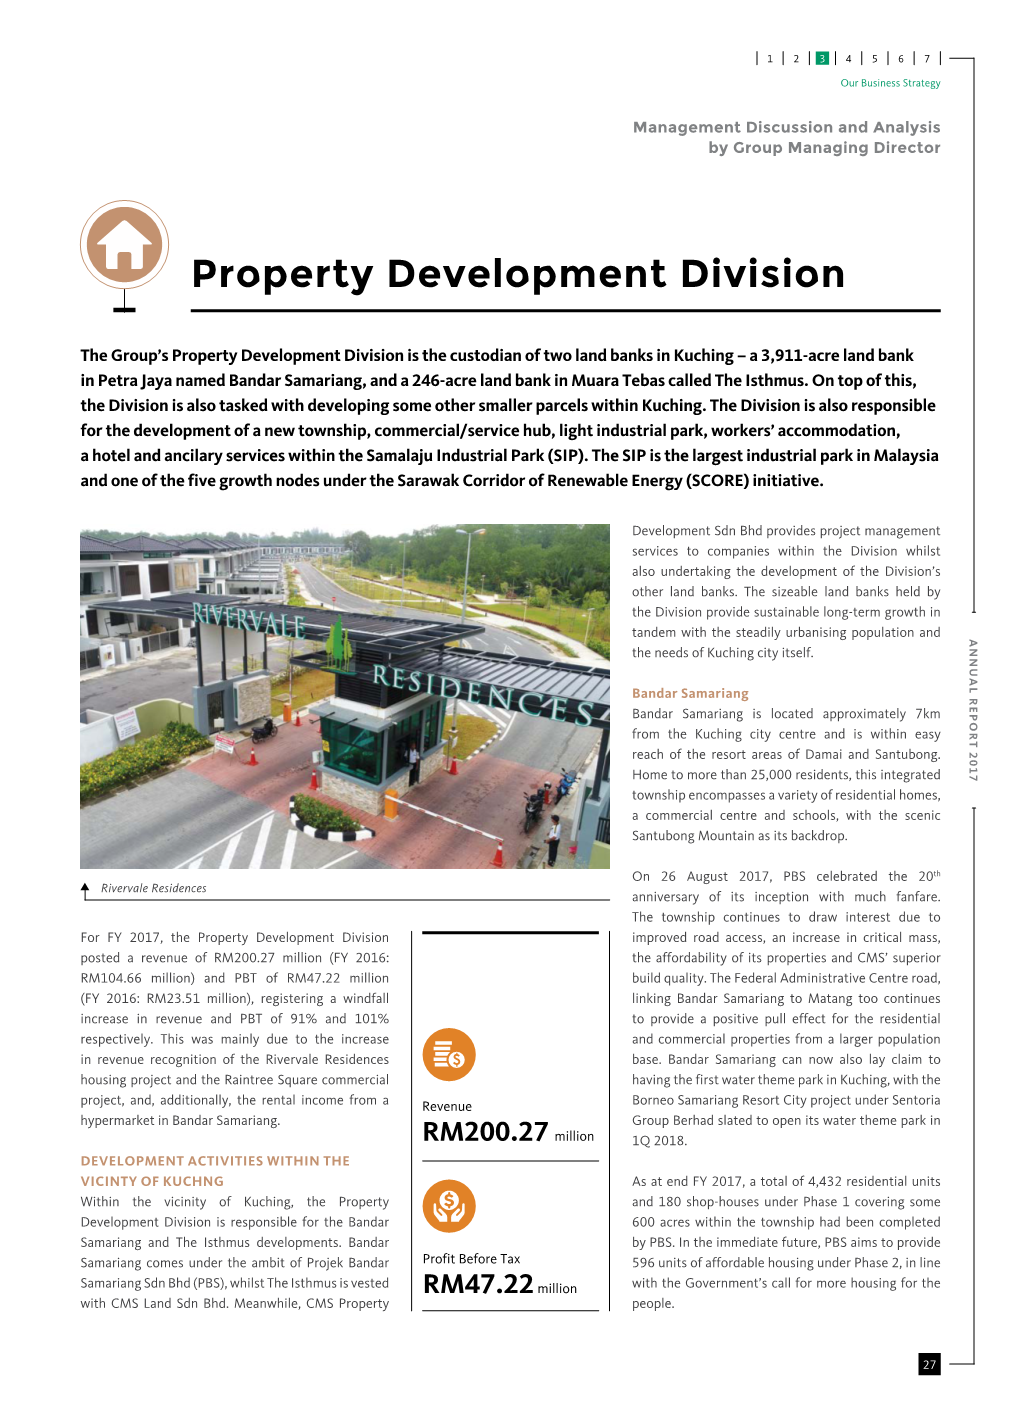 Property Development Division